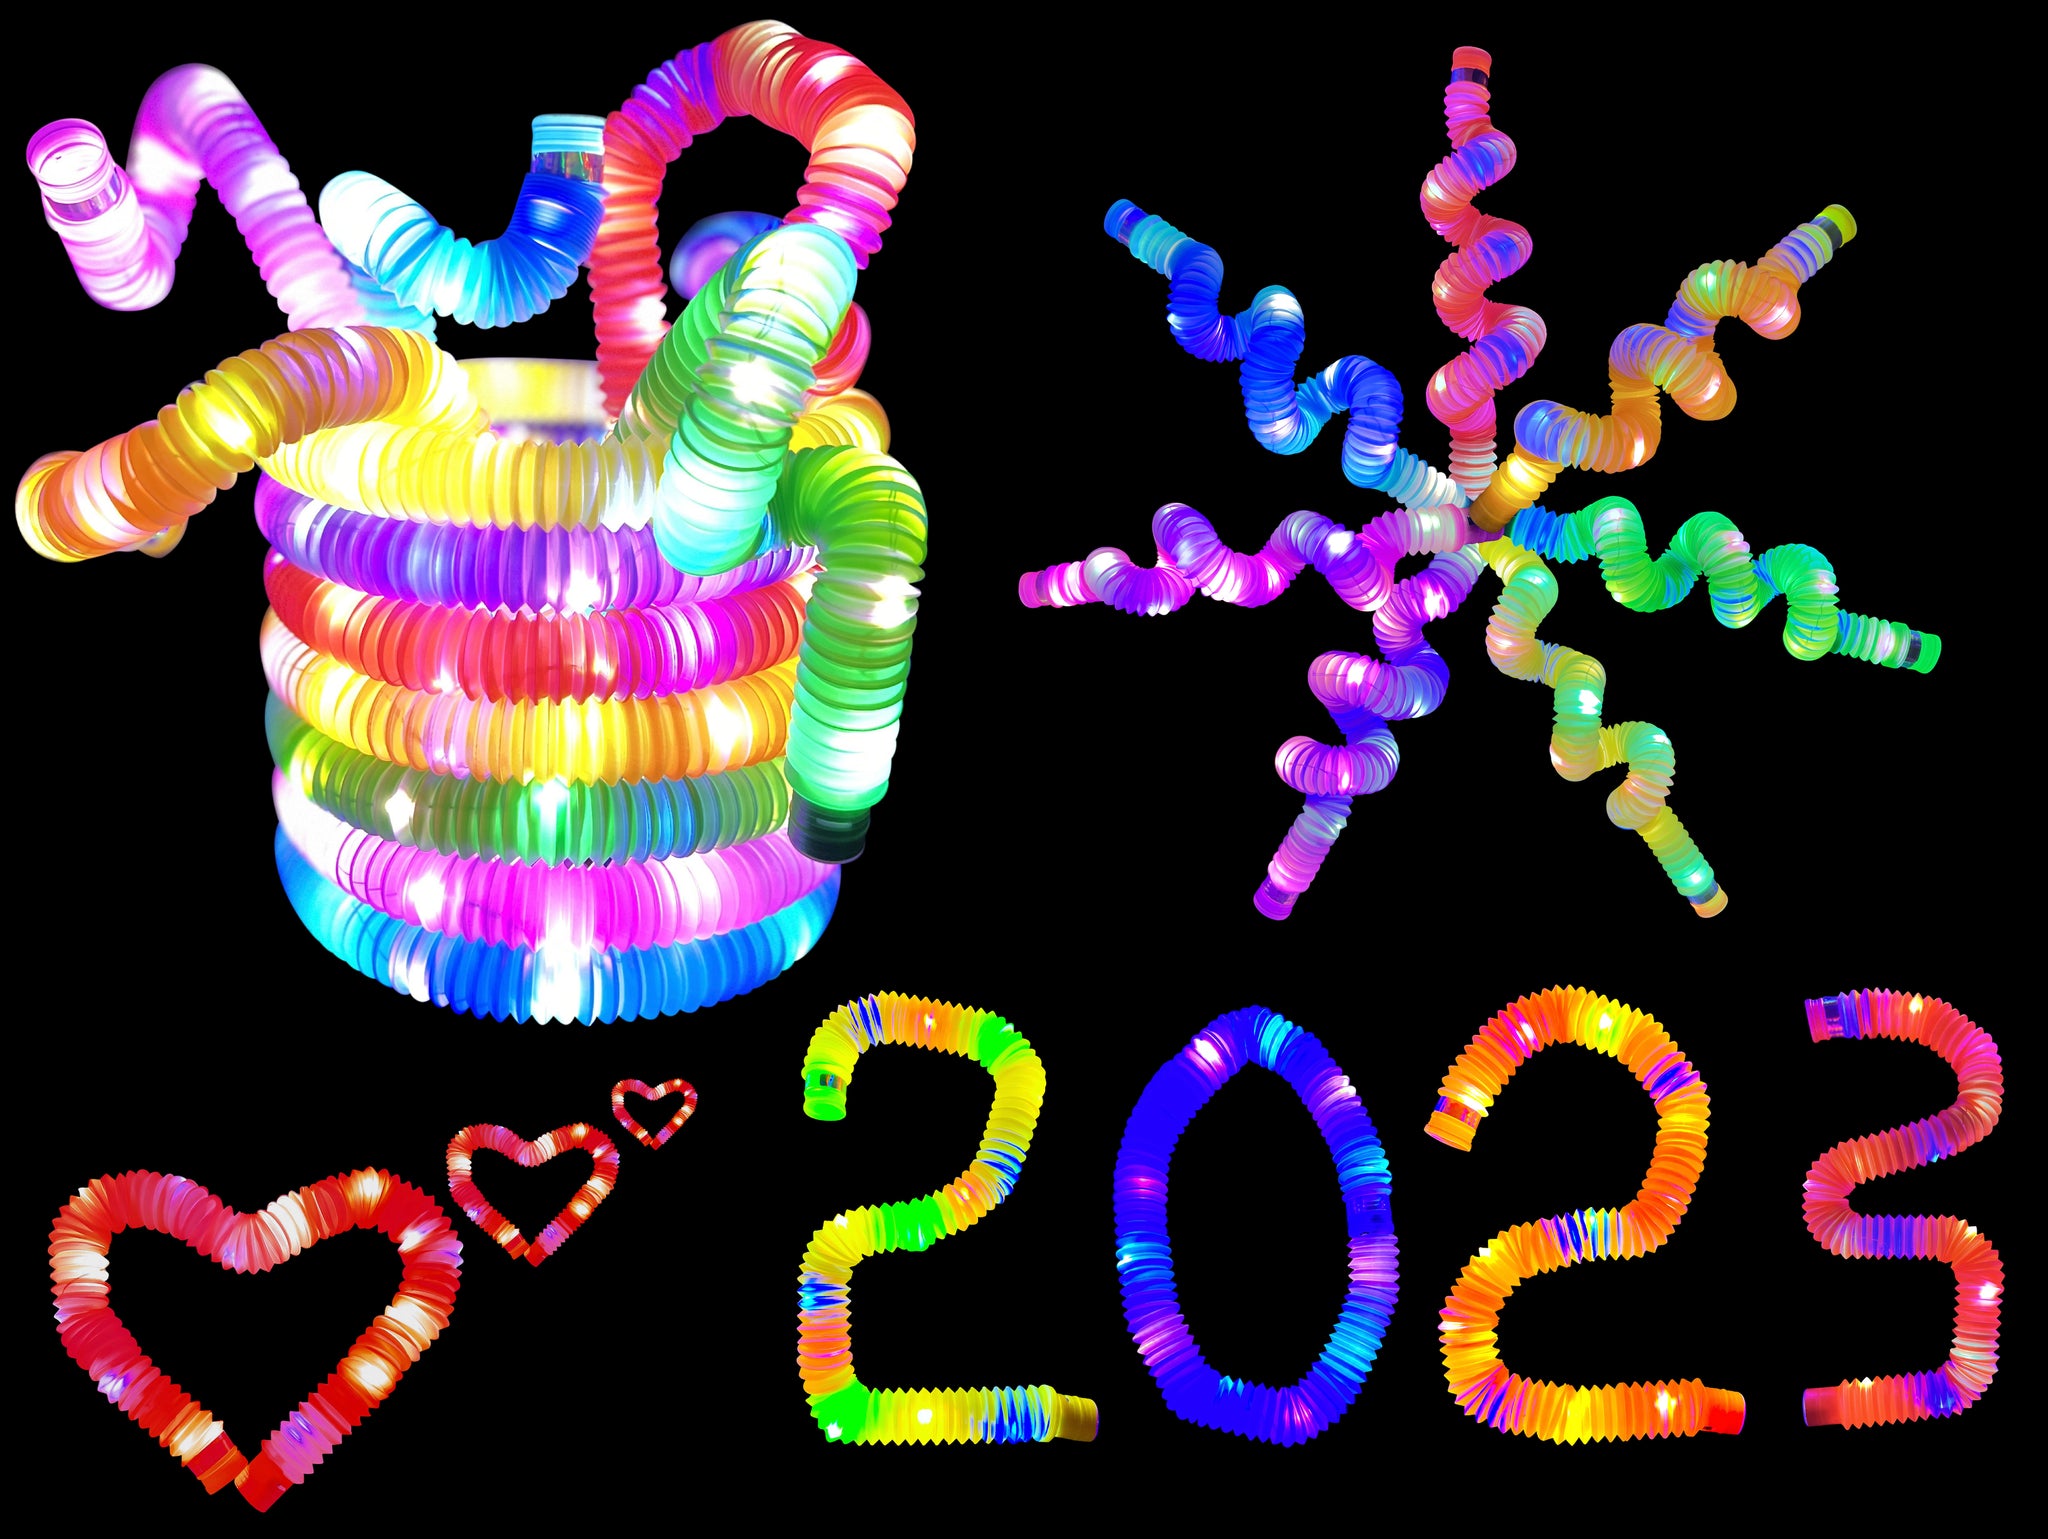 TwCare 16 Pcs Bracelets Glow in The Dark Pop It Fidget Toy, Rainbow Party Favors, Anti-Anxiety Stress Relief Wristband Set, Push Bubbles Sensory Autistic